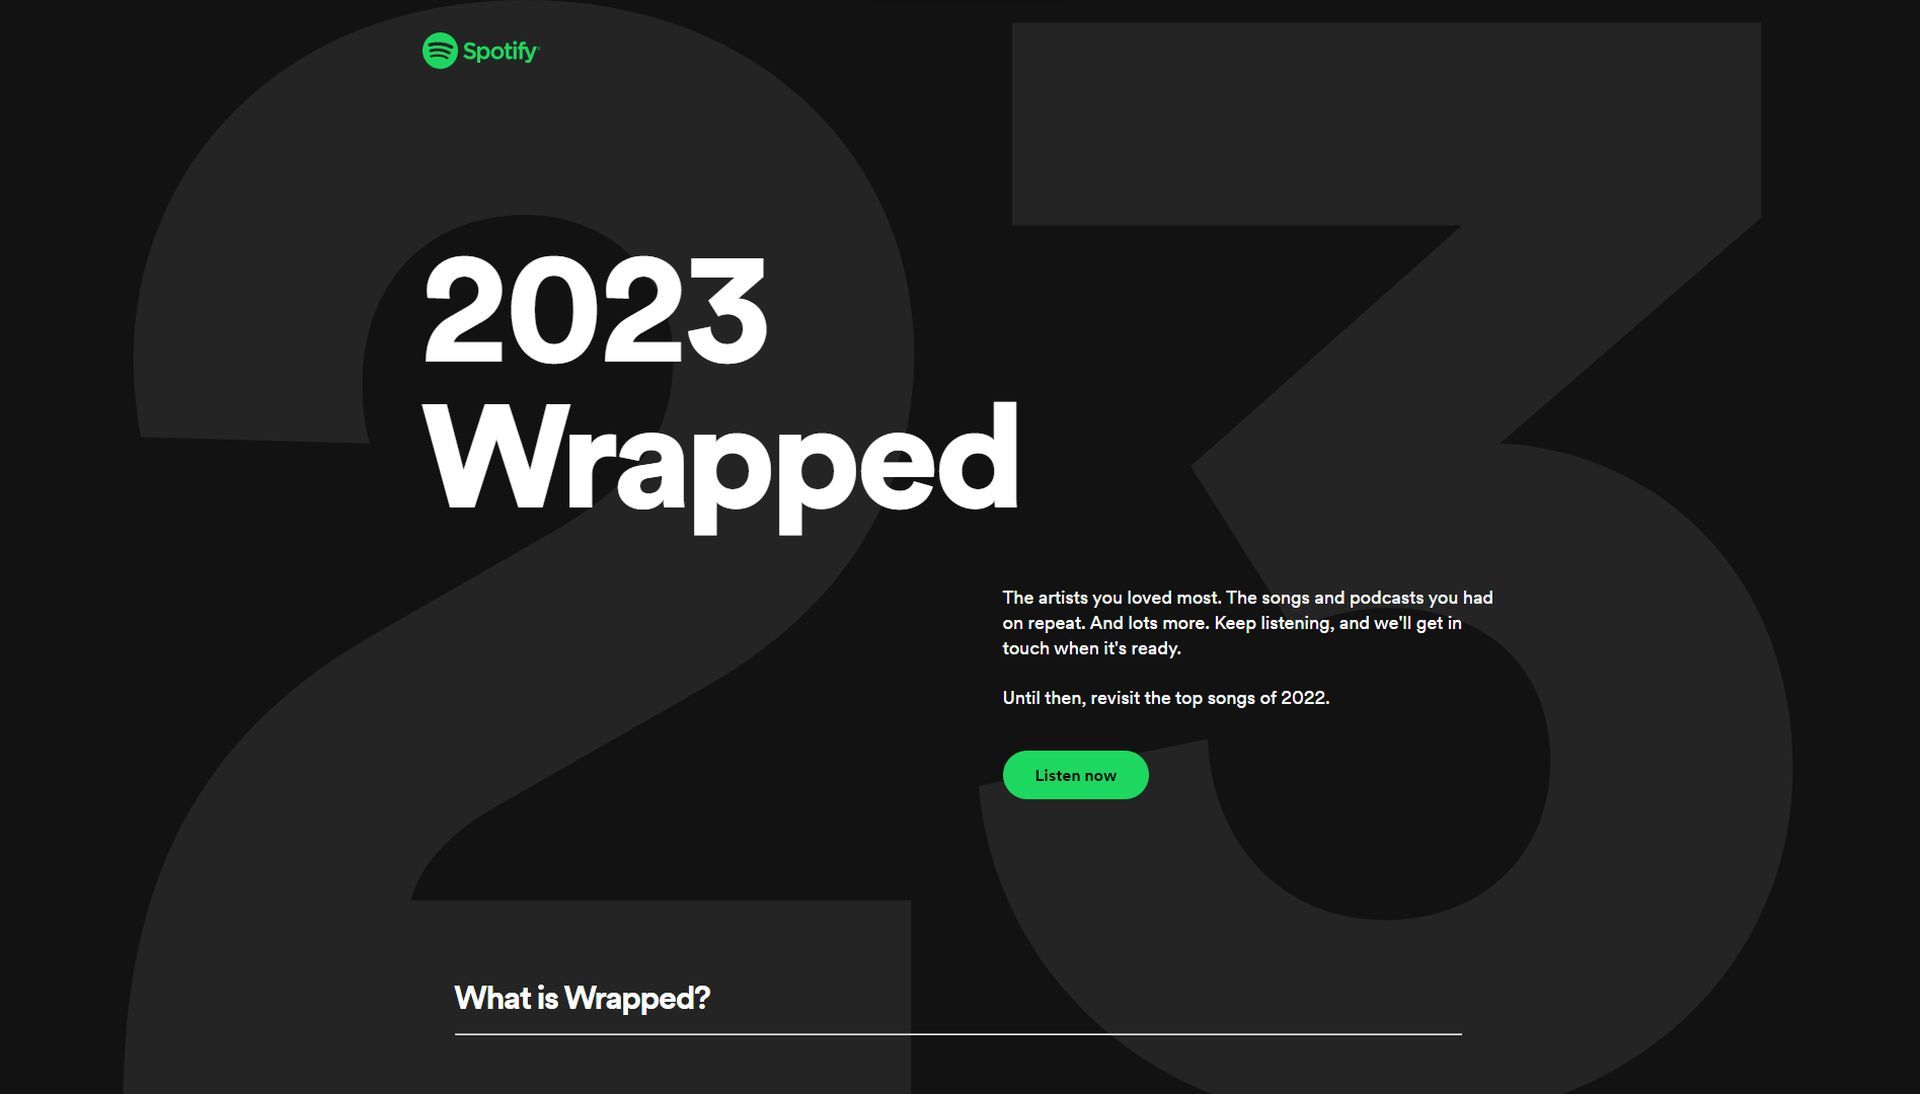 Spotify-samenvatting, Wrapped 2023